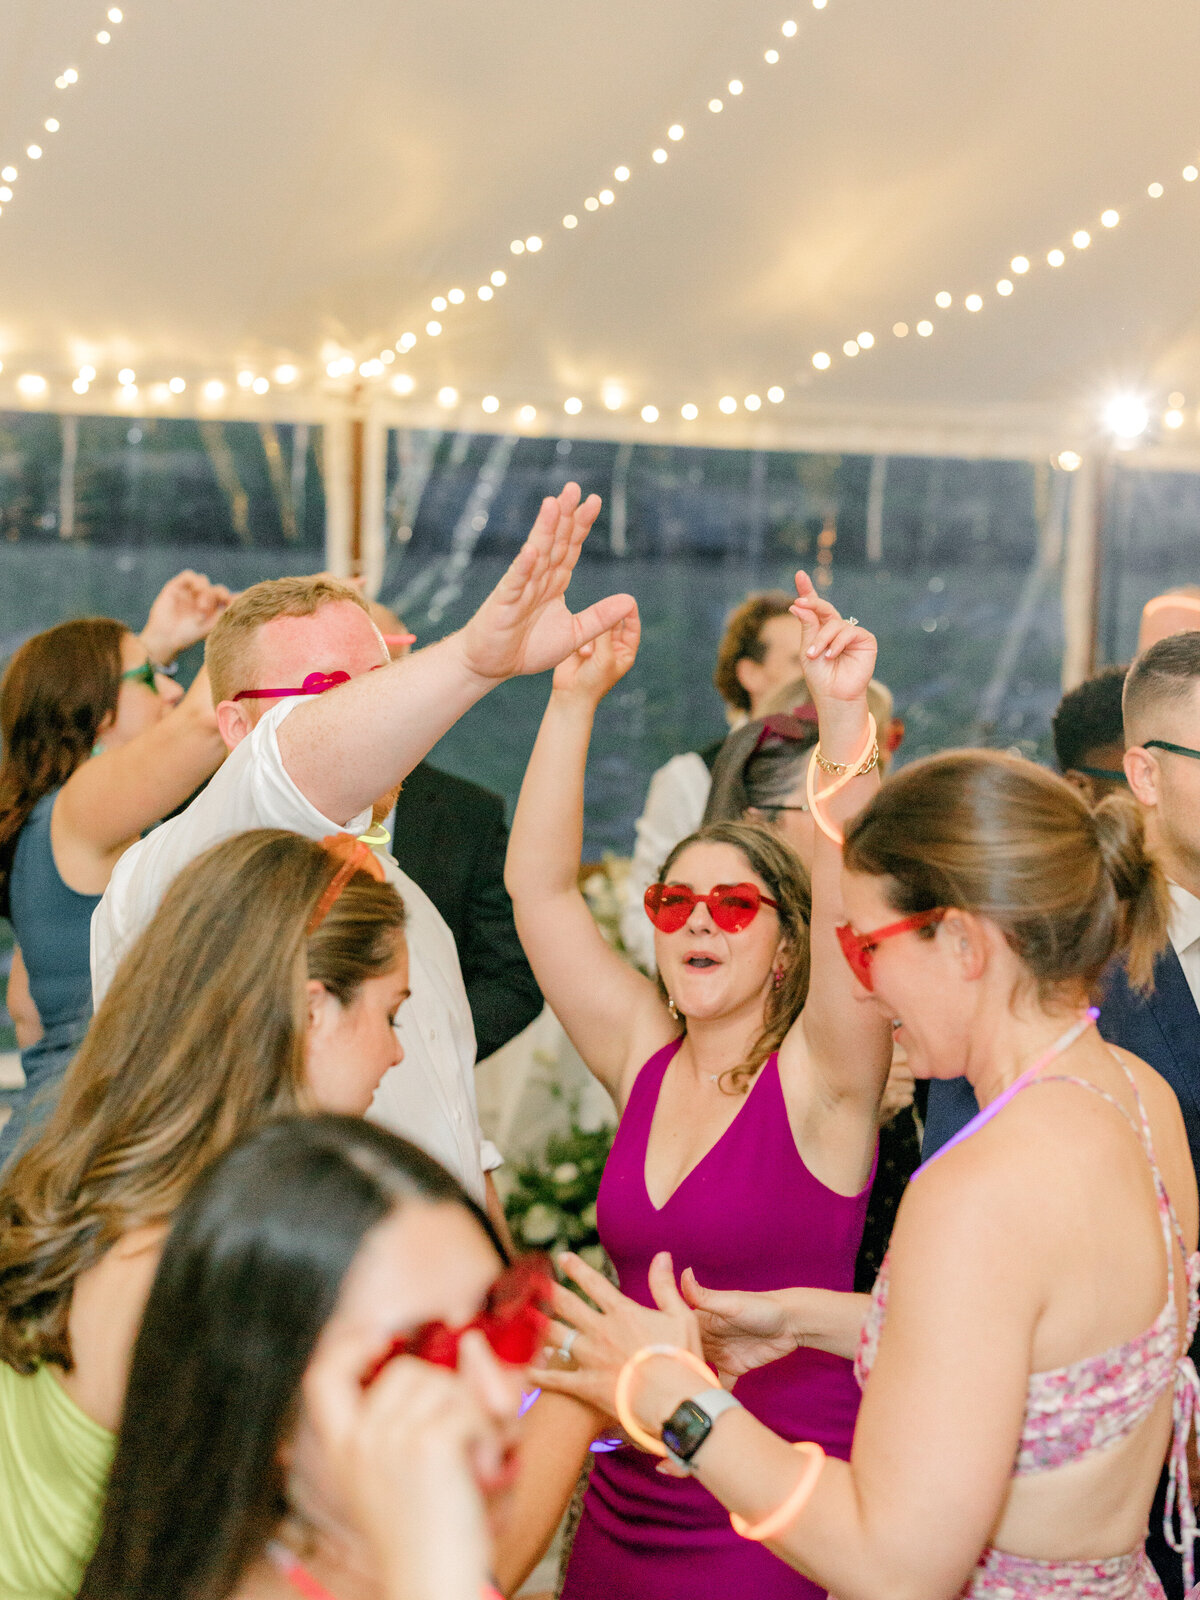 Wedding guests dancing under string lights wearing red heart glasses